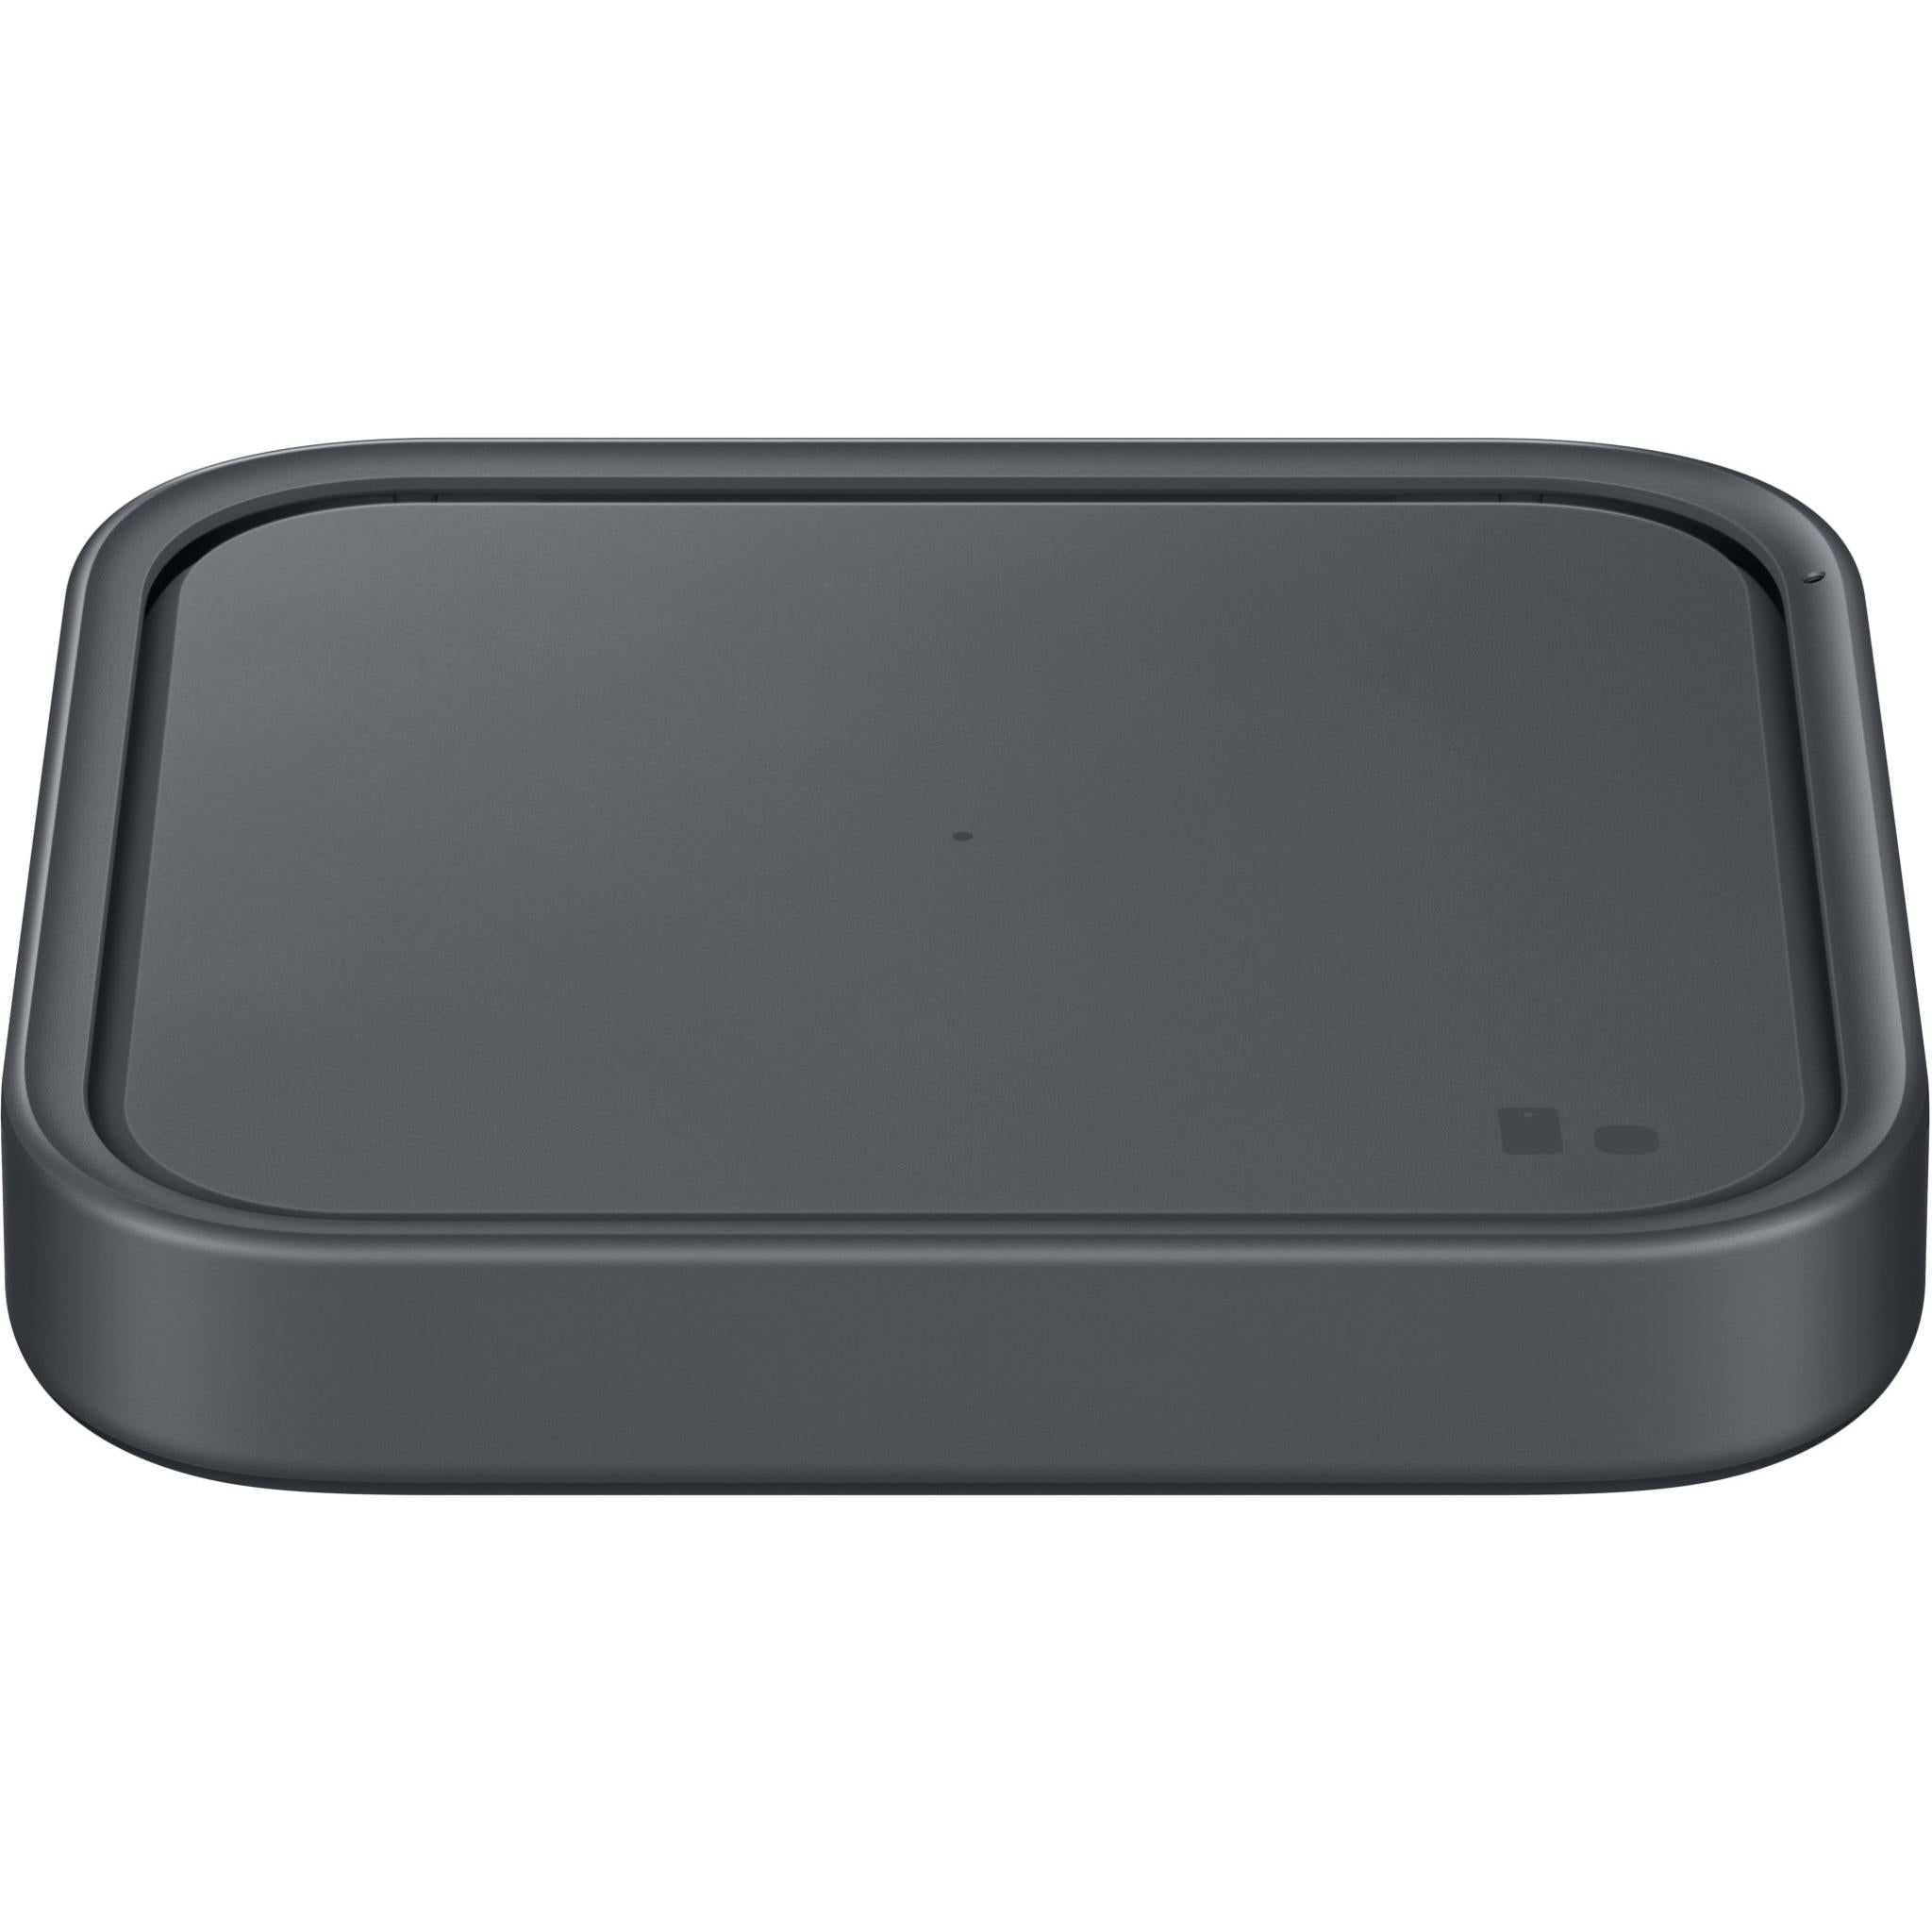 samsung wireless charger pad (dark grey)